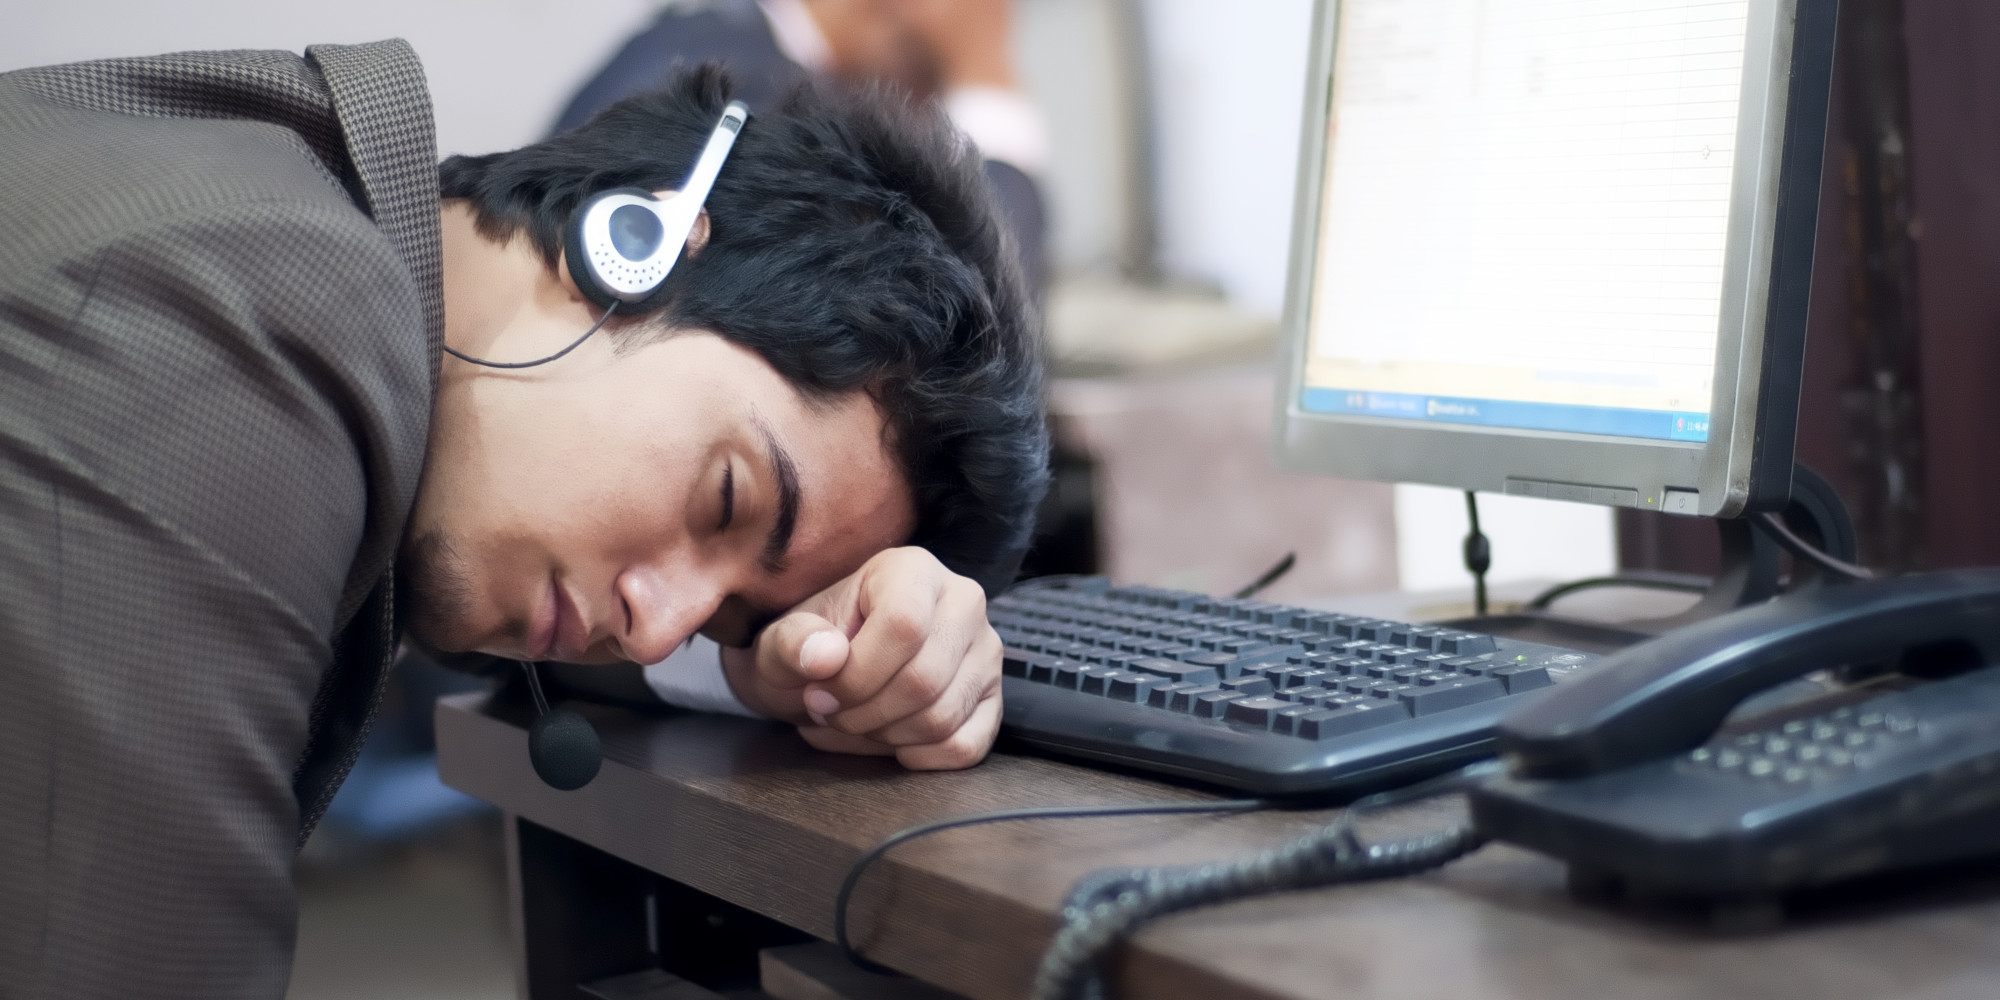 Nosleep 1 1 – prevent computer sleep deprivation sleep